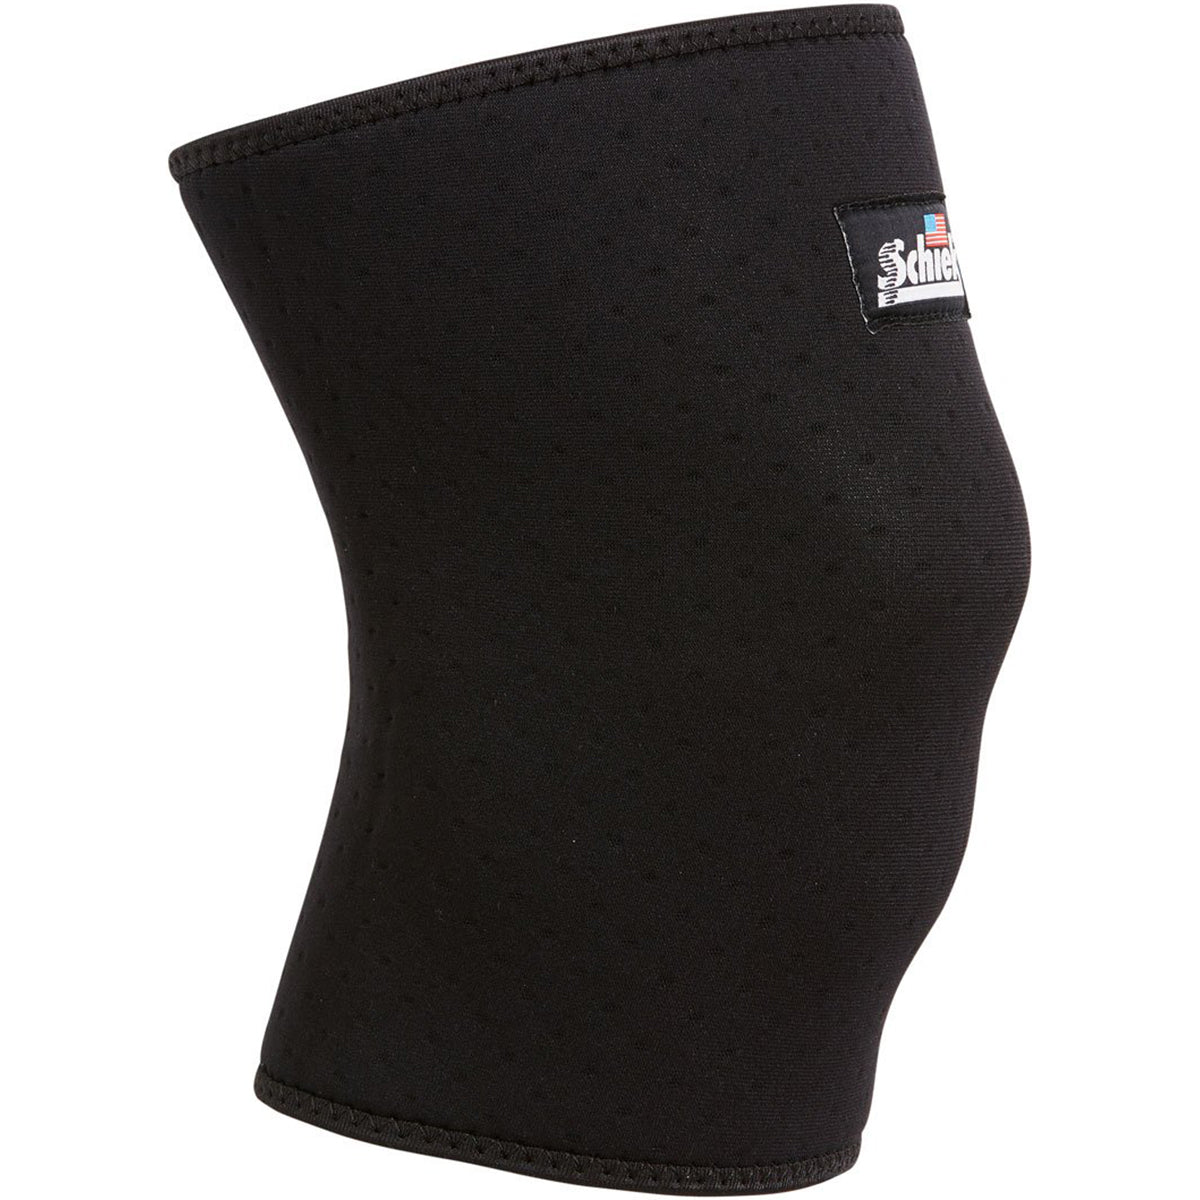 Schiek Sports Model 1150 Neoprene Knee Sleeves - Black Schiek Sports